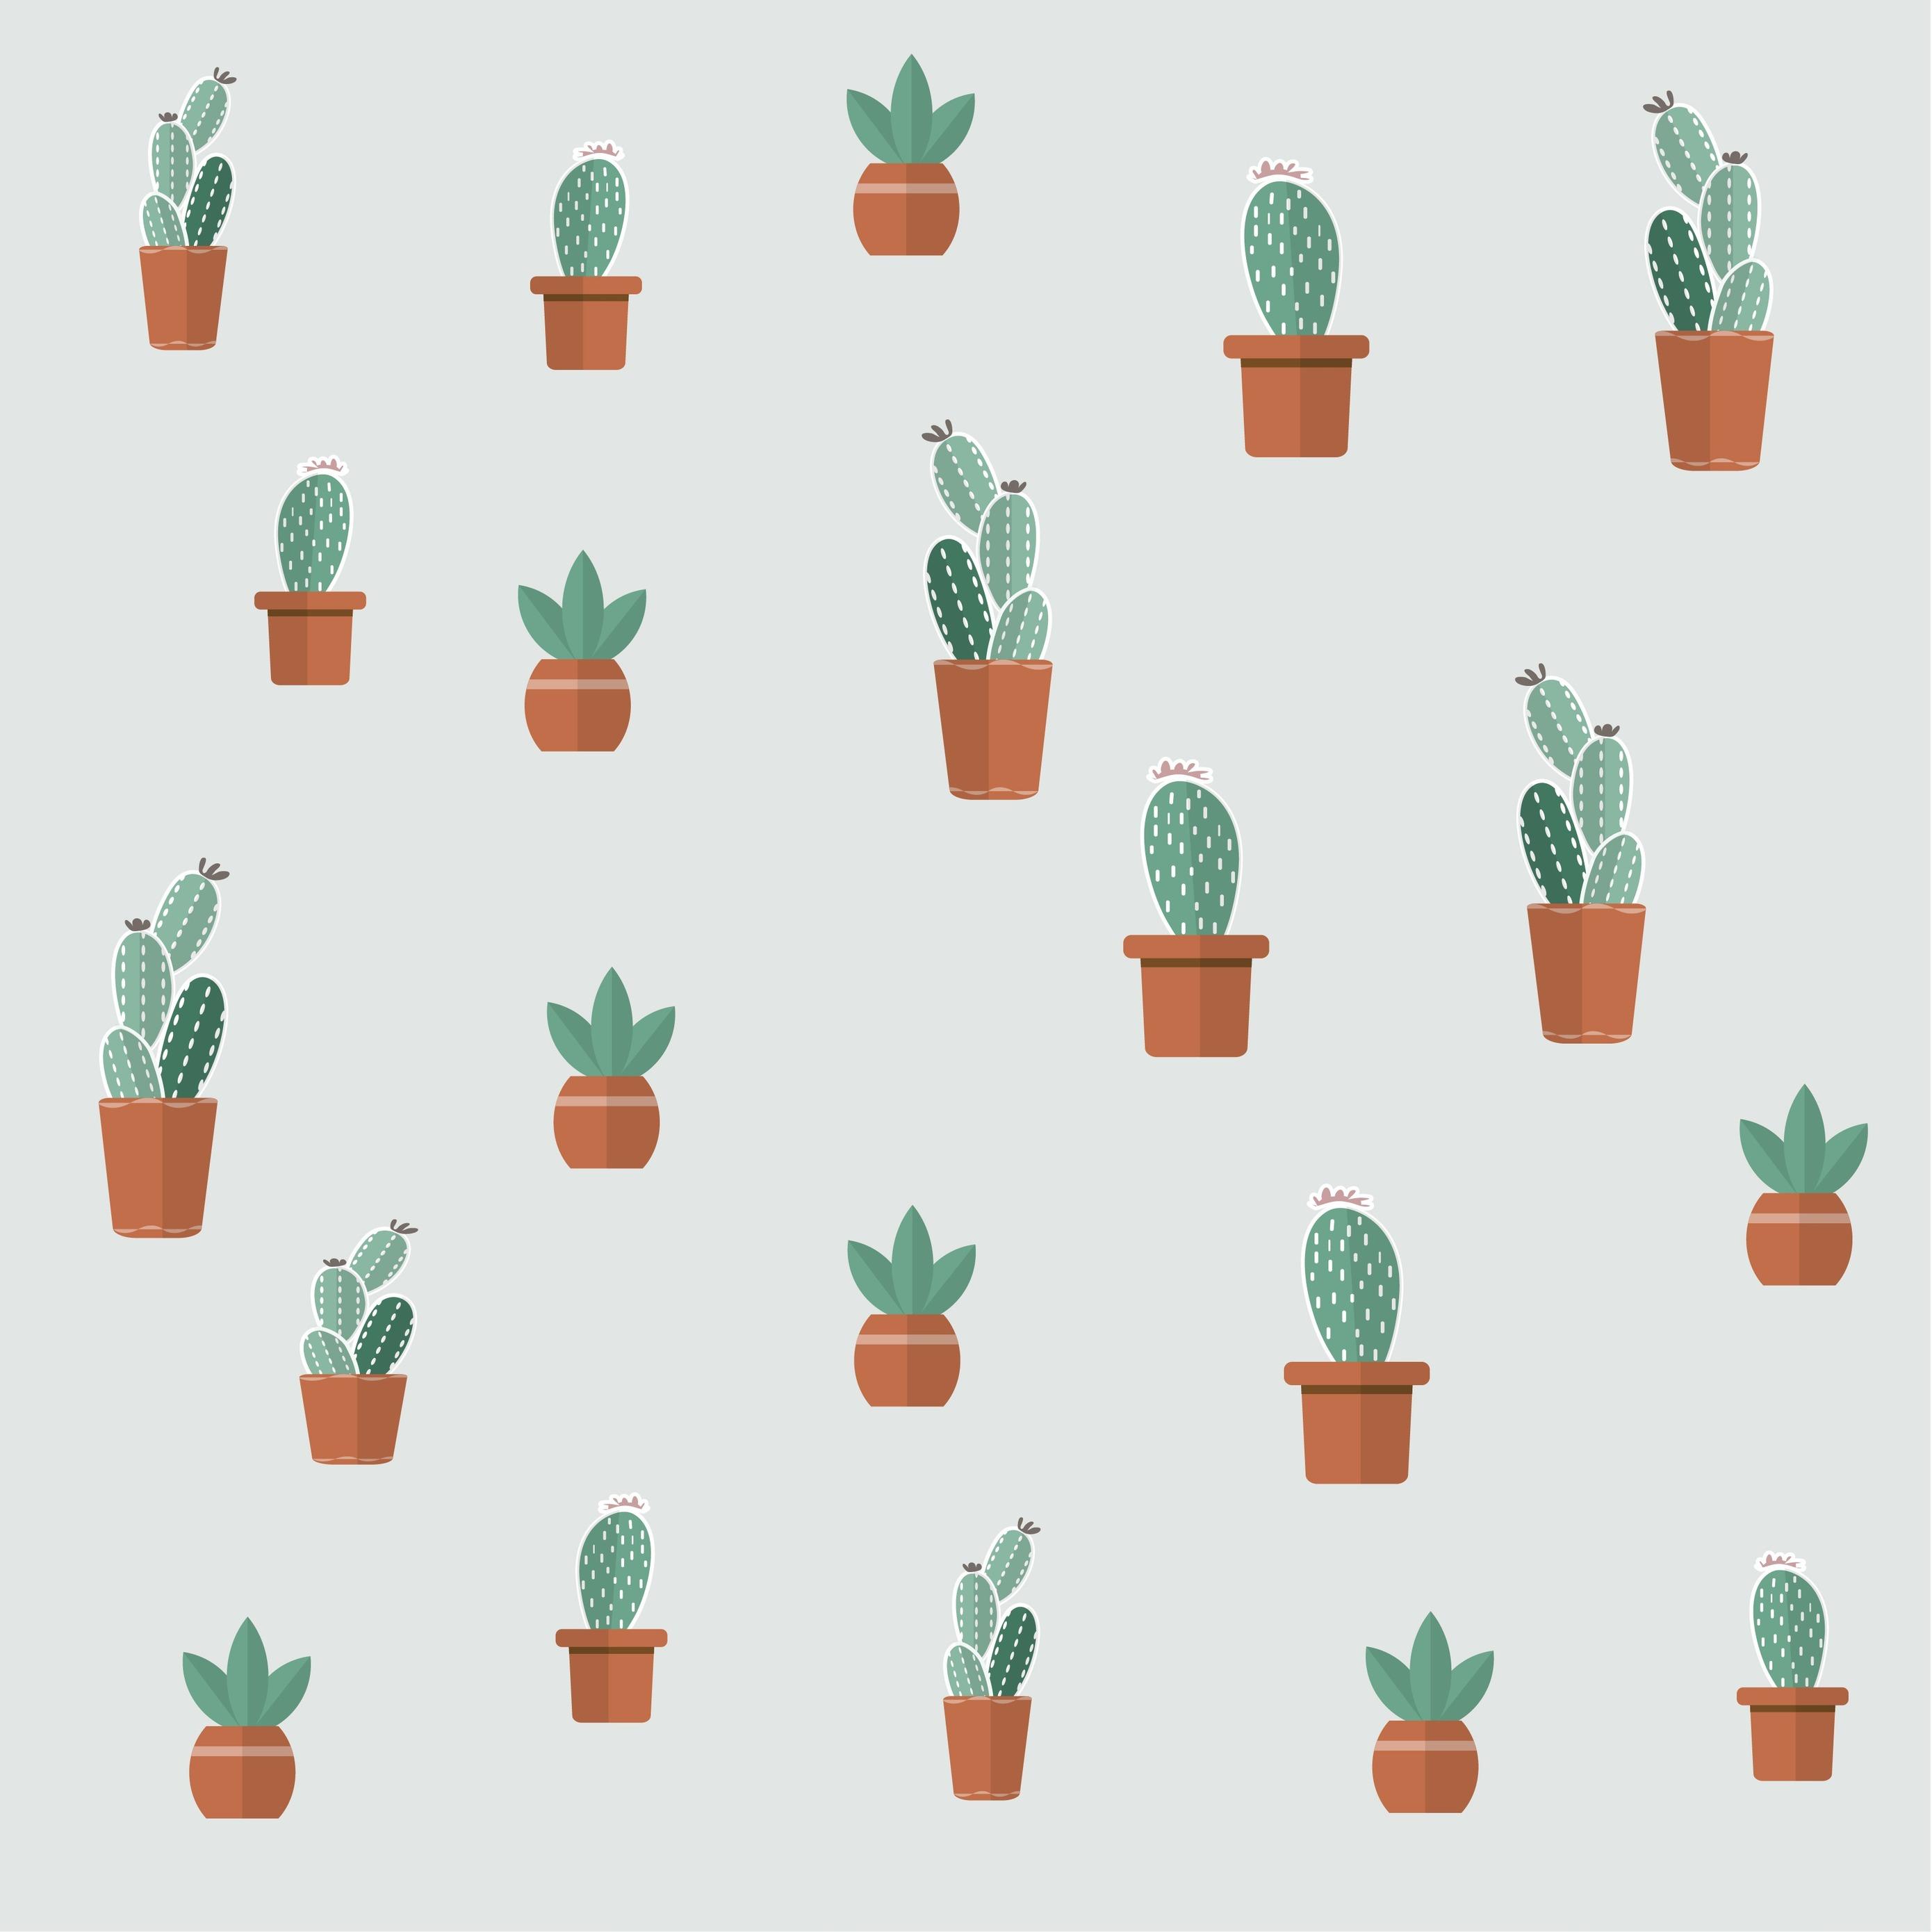 A pattern of cactus plants in pots - Cactus, succulent